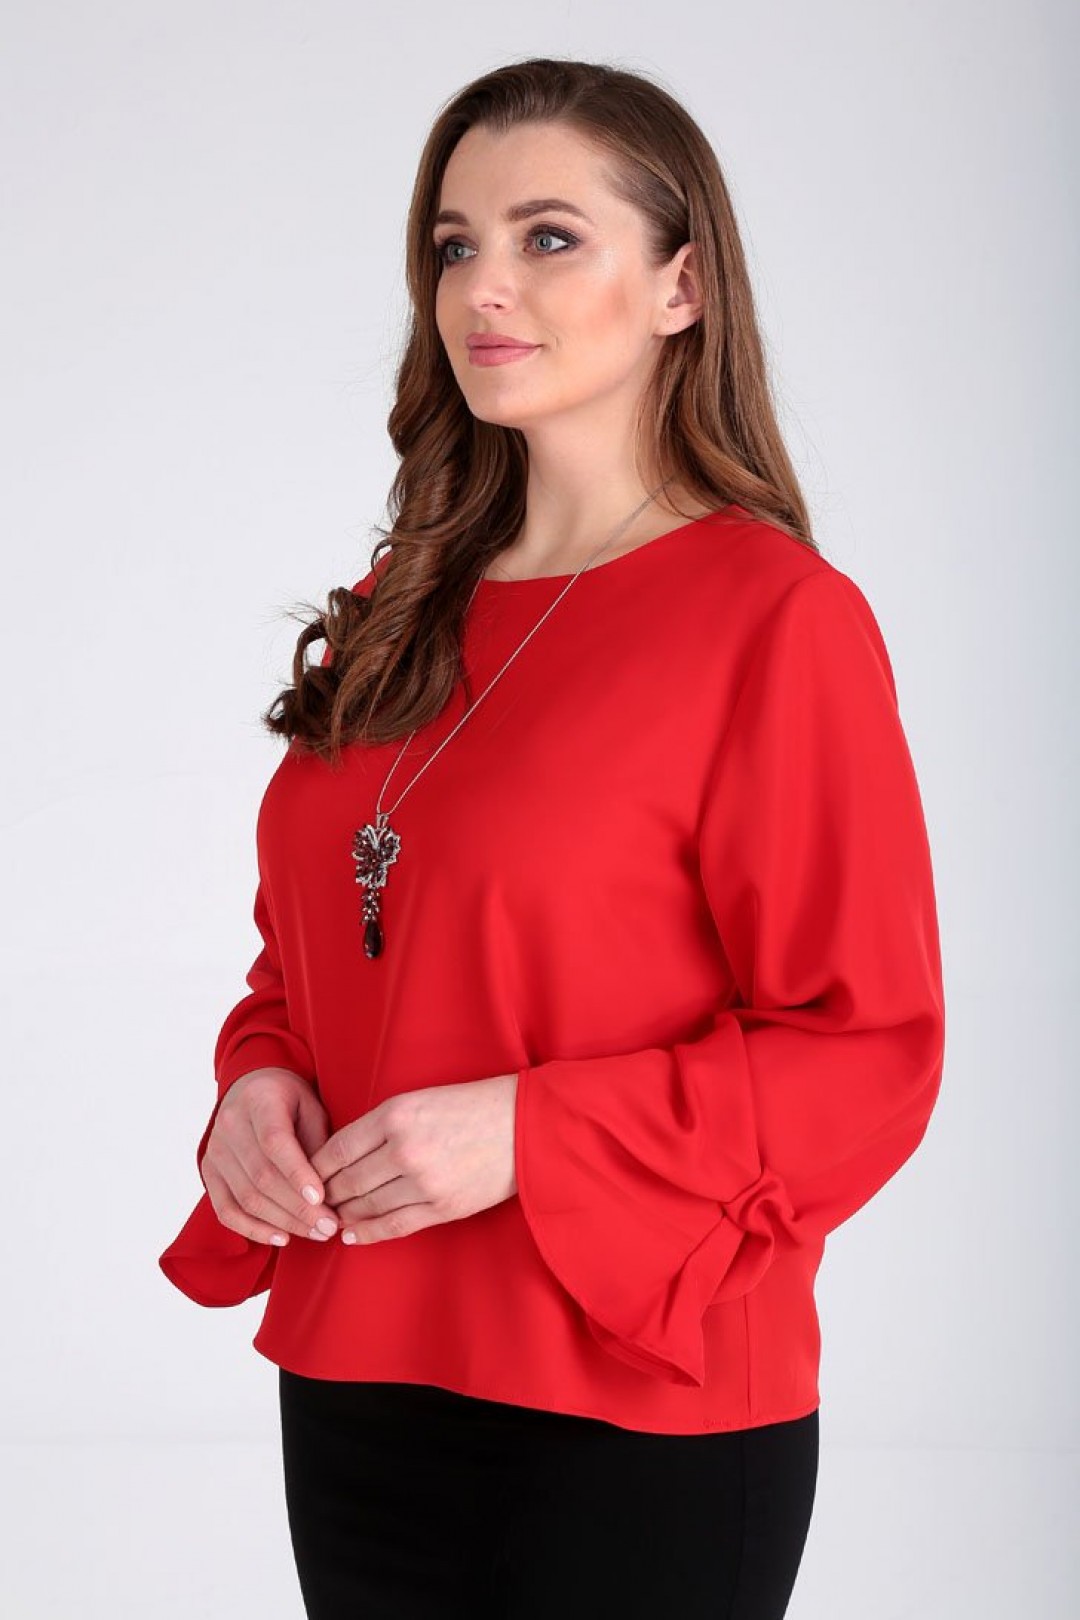 Блуза Таир-Гранд 62365 красный